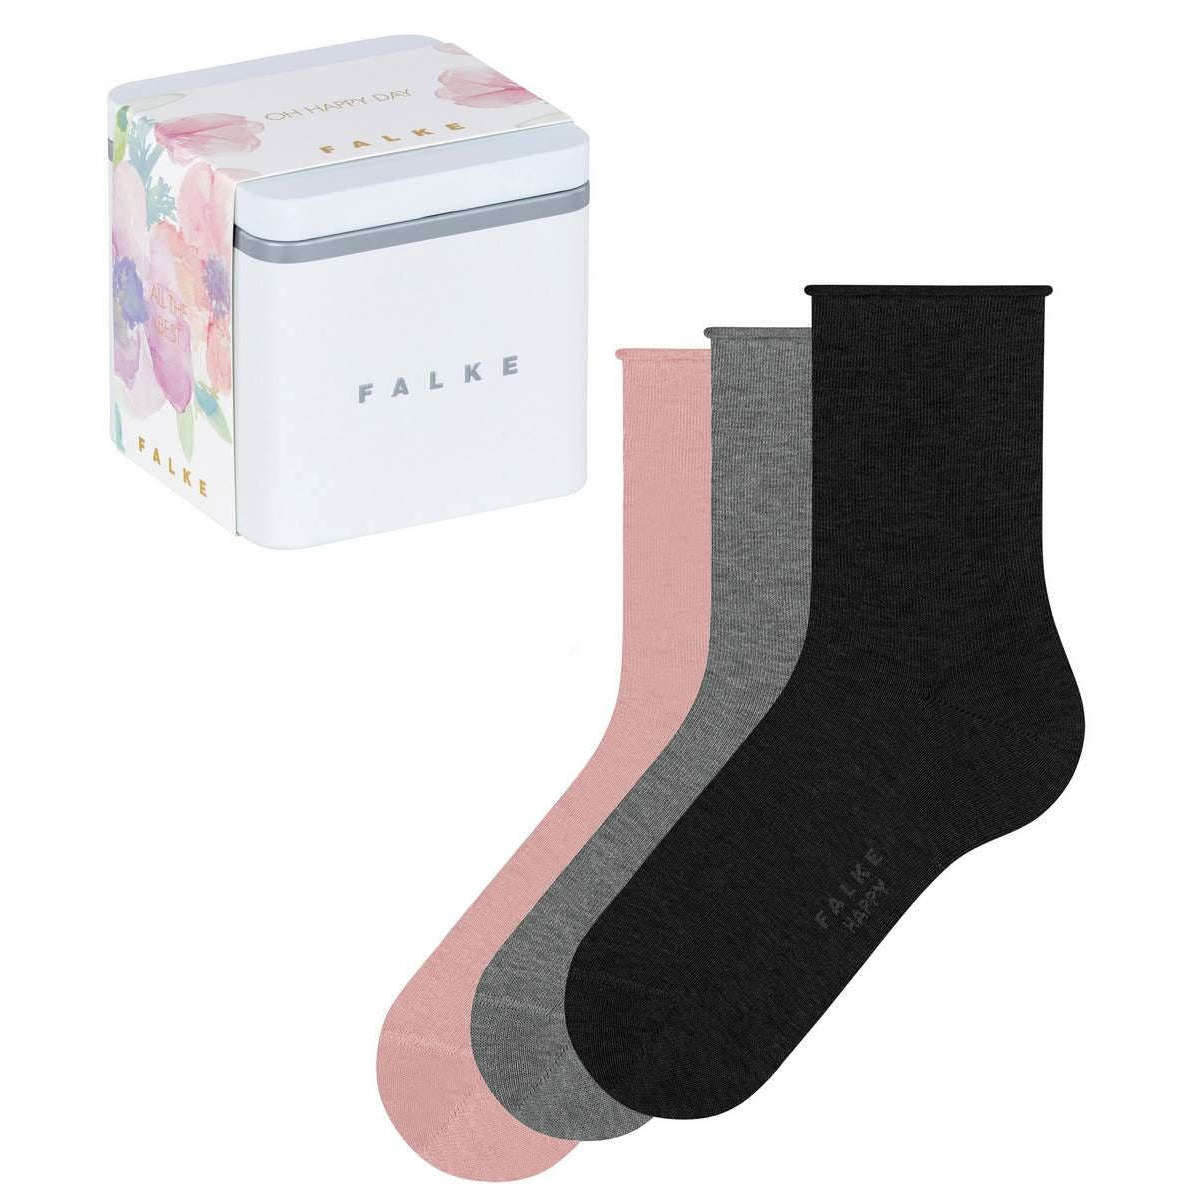 Falke Happy Box Oh Happy Days 3 Pack Socks - Black/Grey/Pink